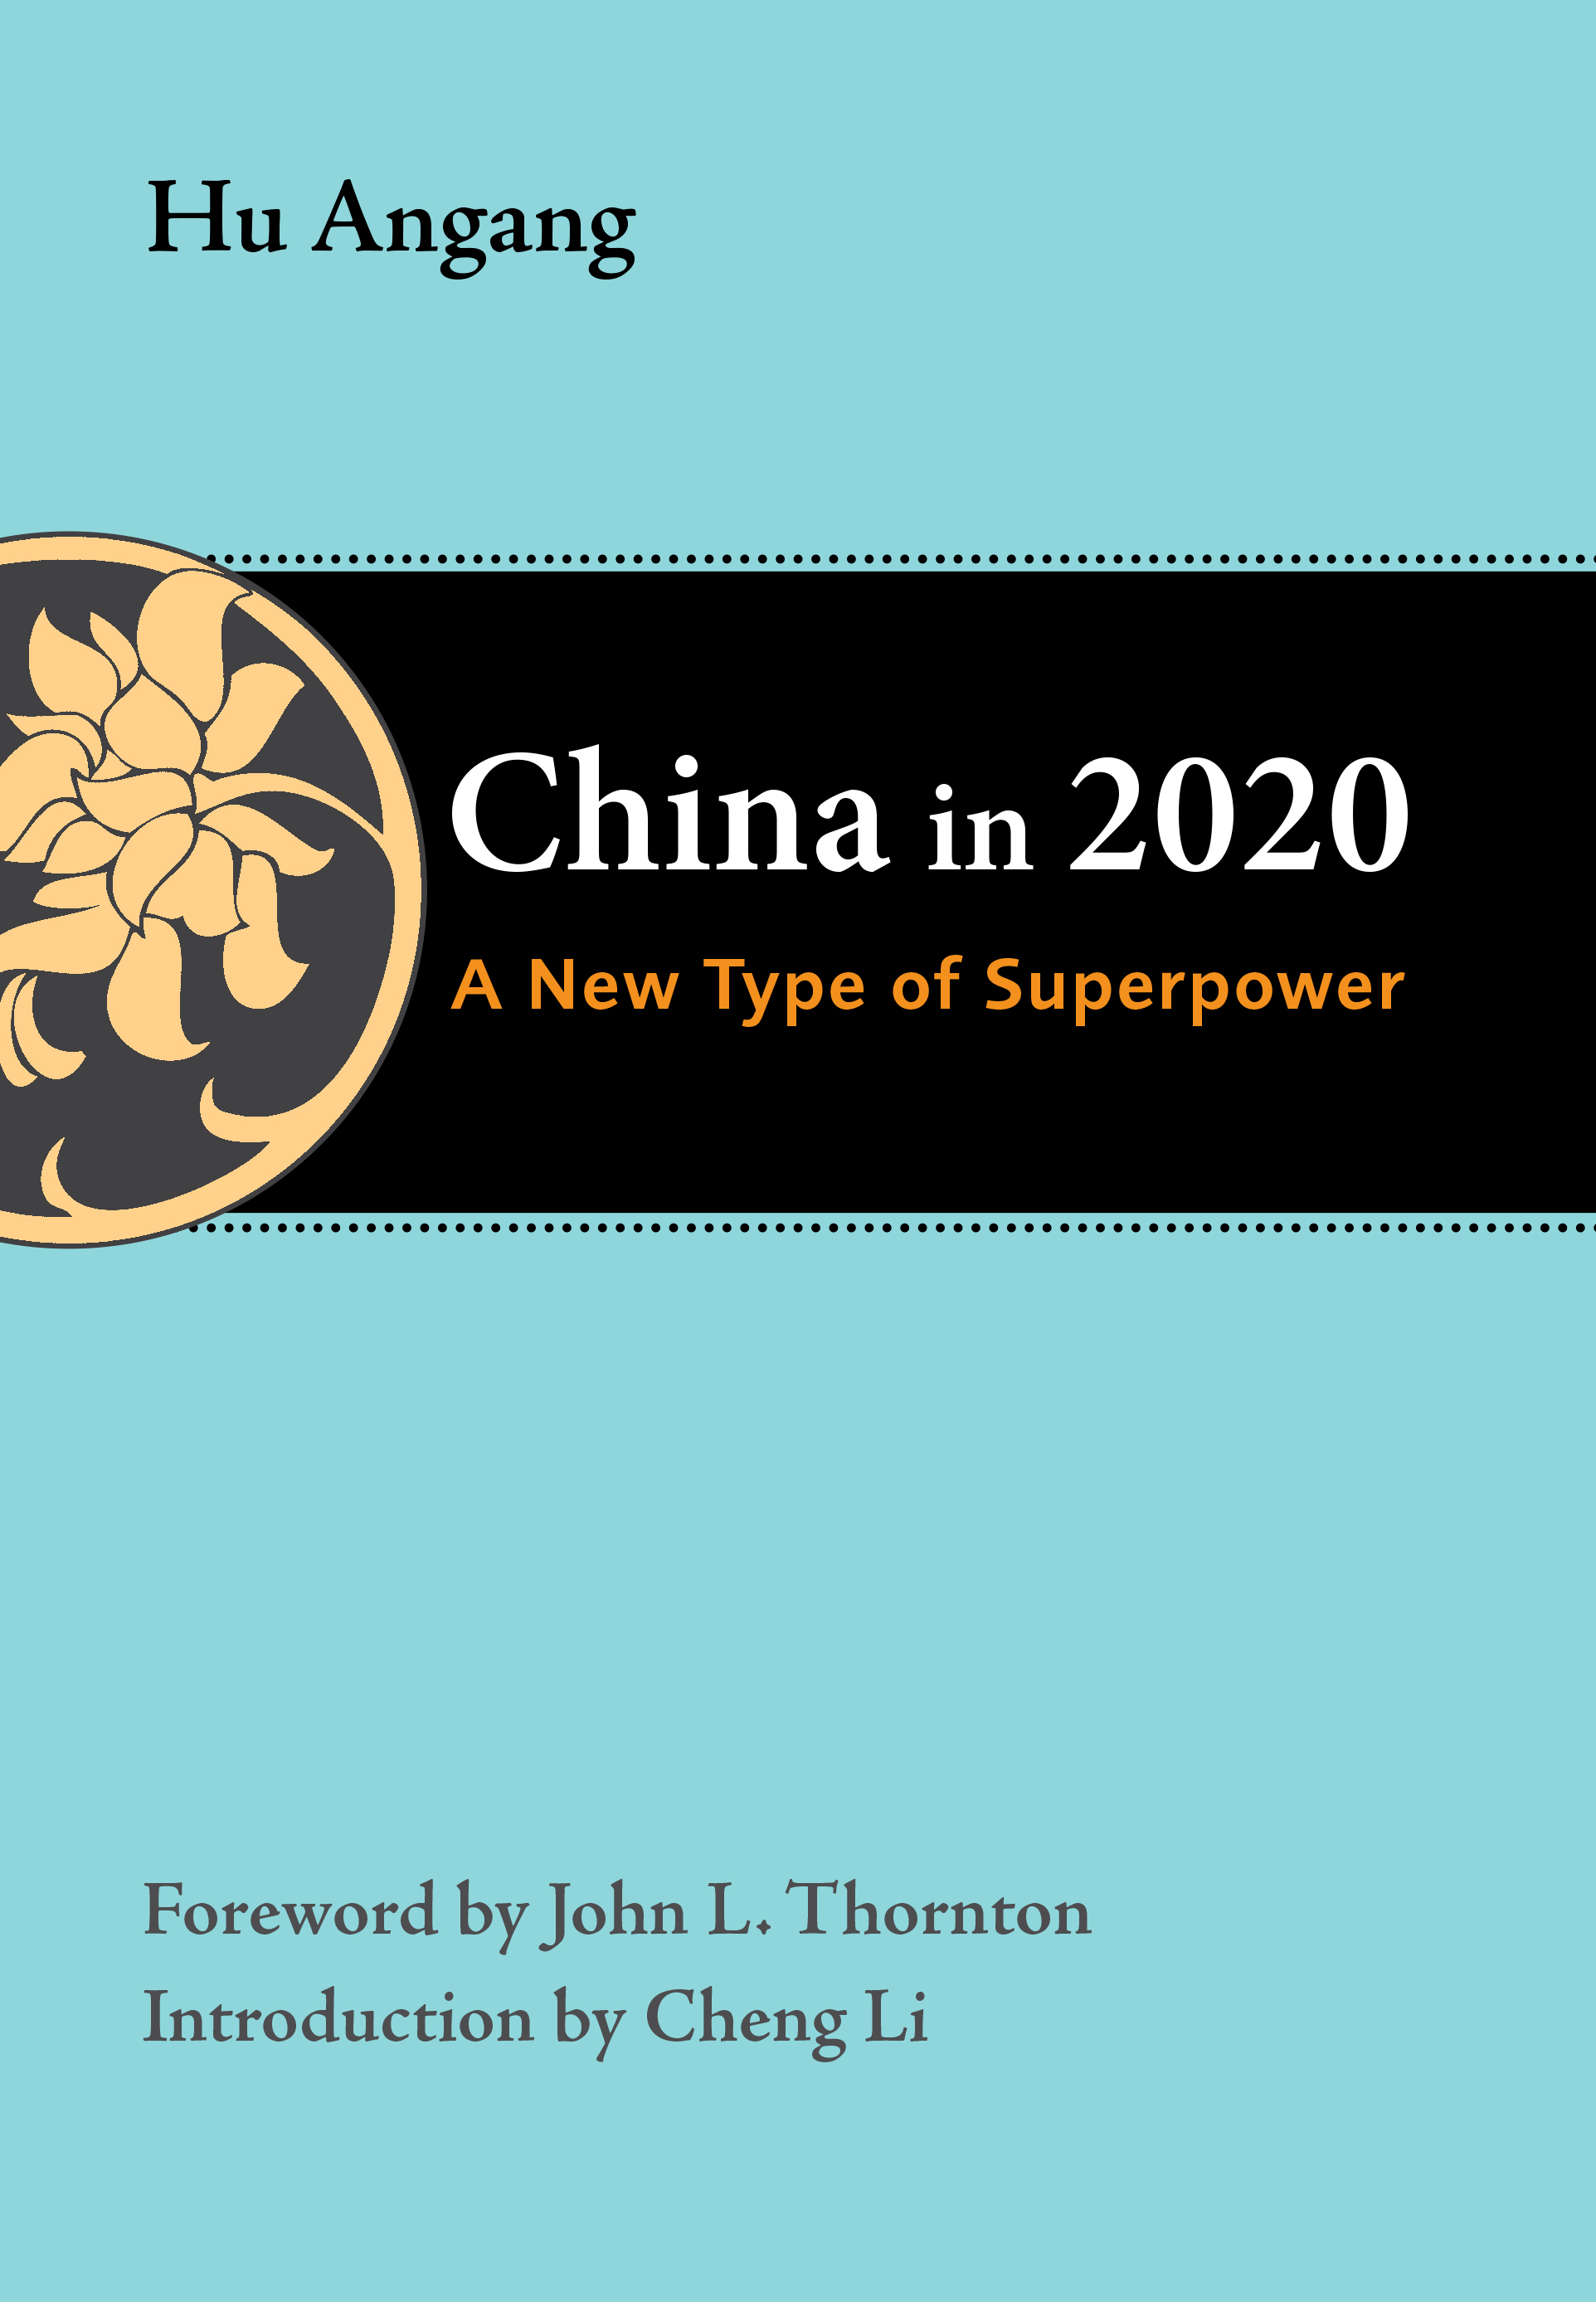 Essay china emerging superpower